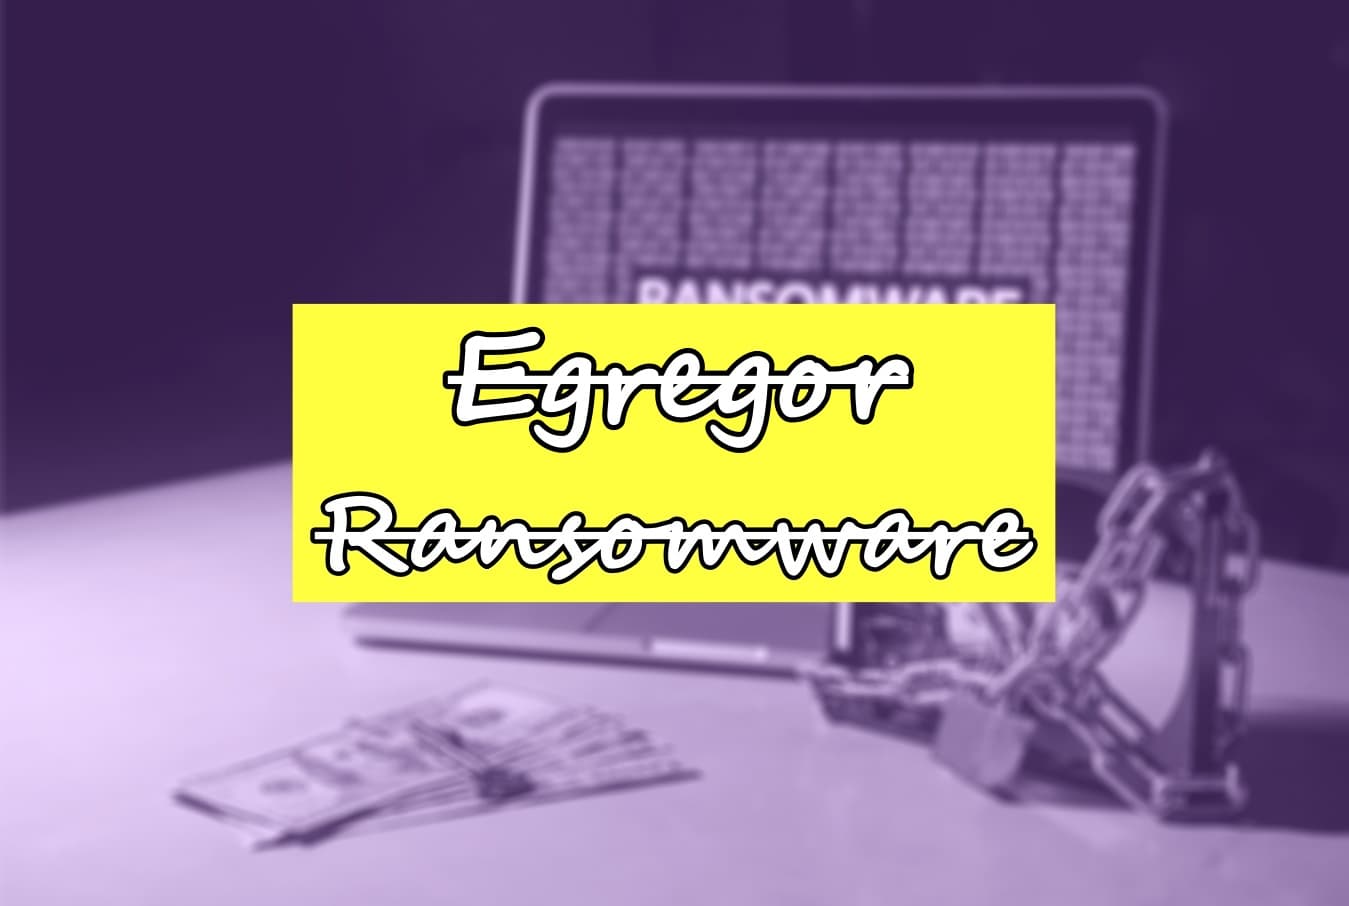 Members of the infamous Egregor ransomware arrested in Ukrainian